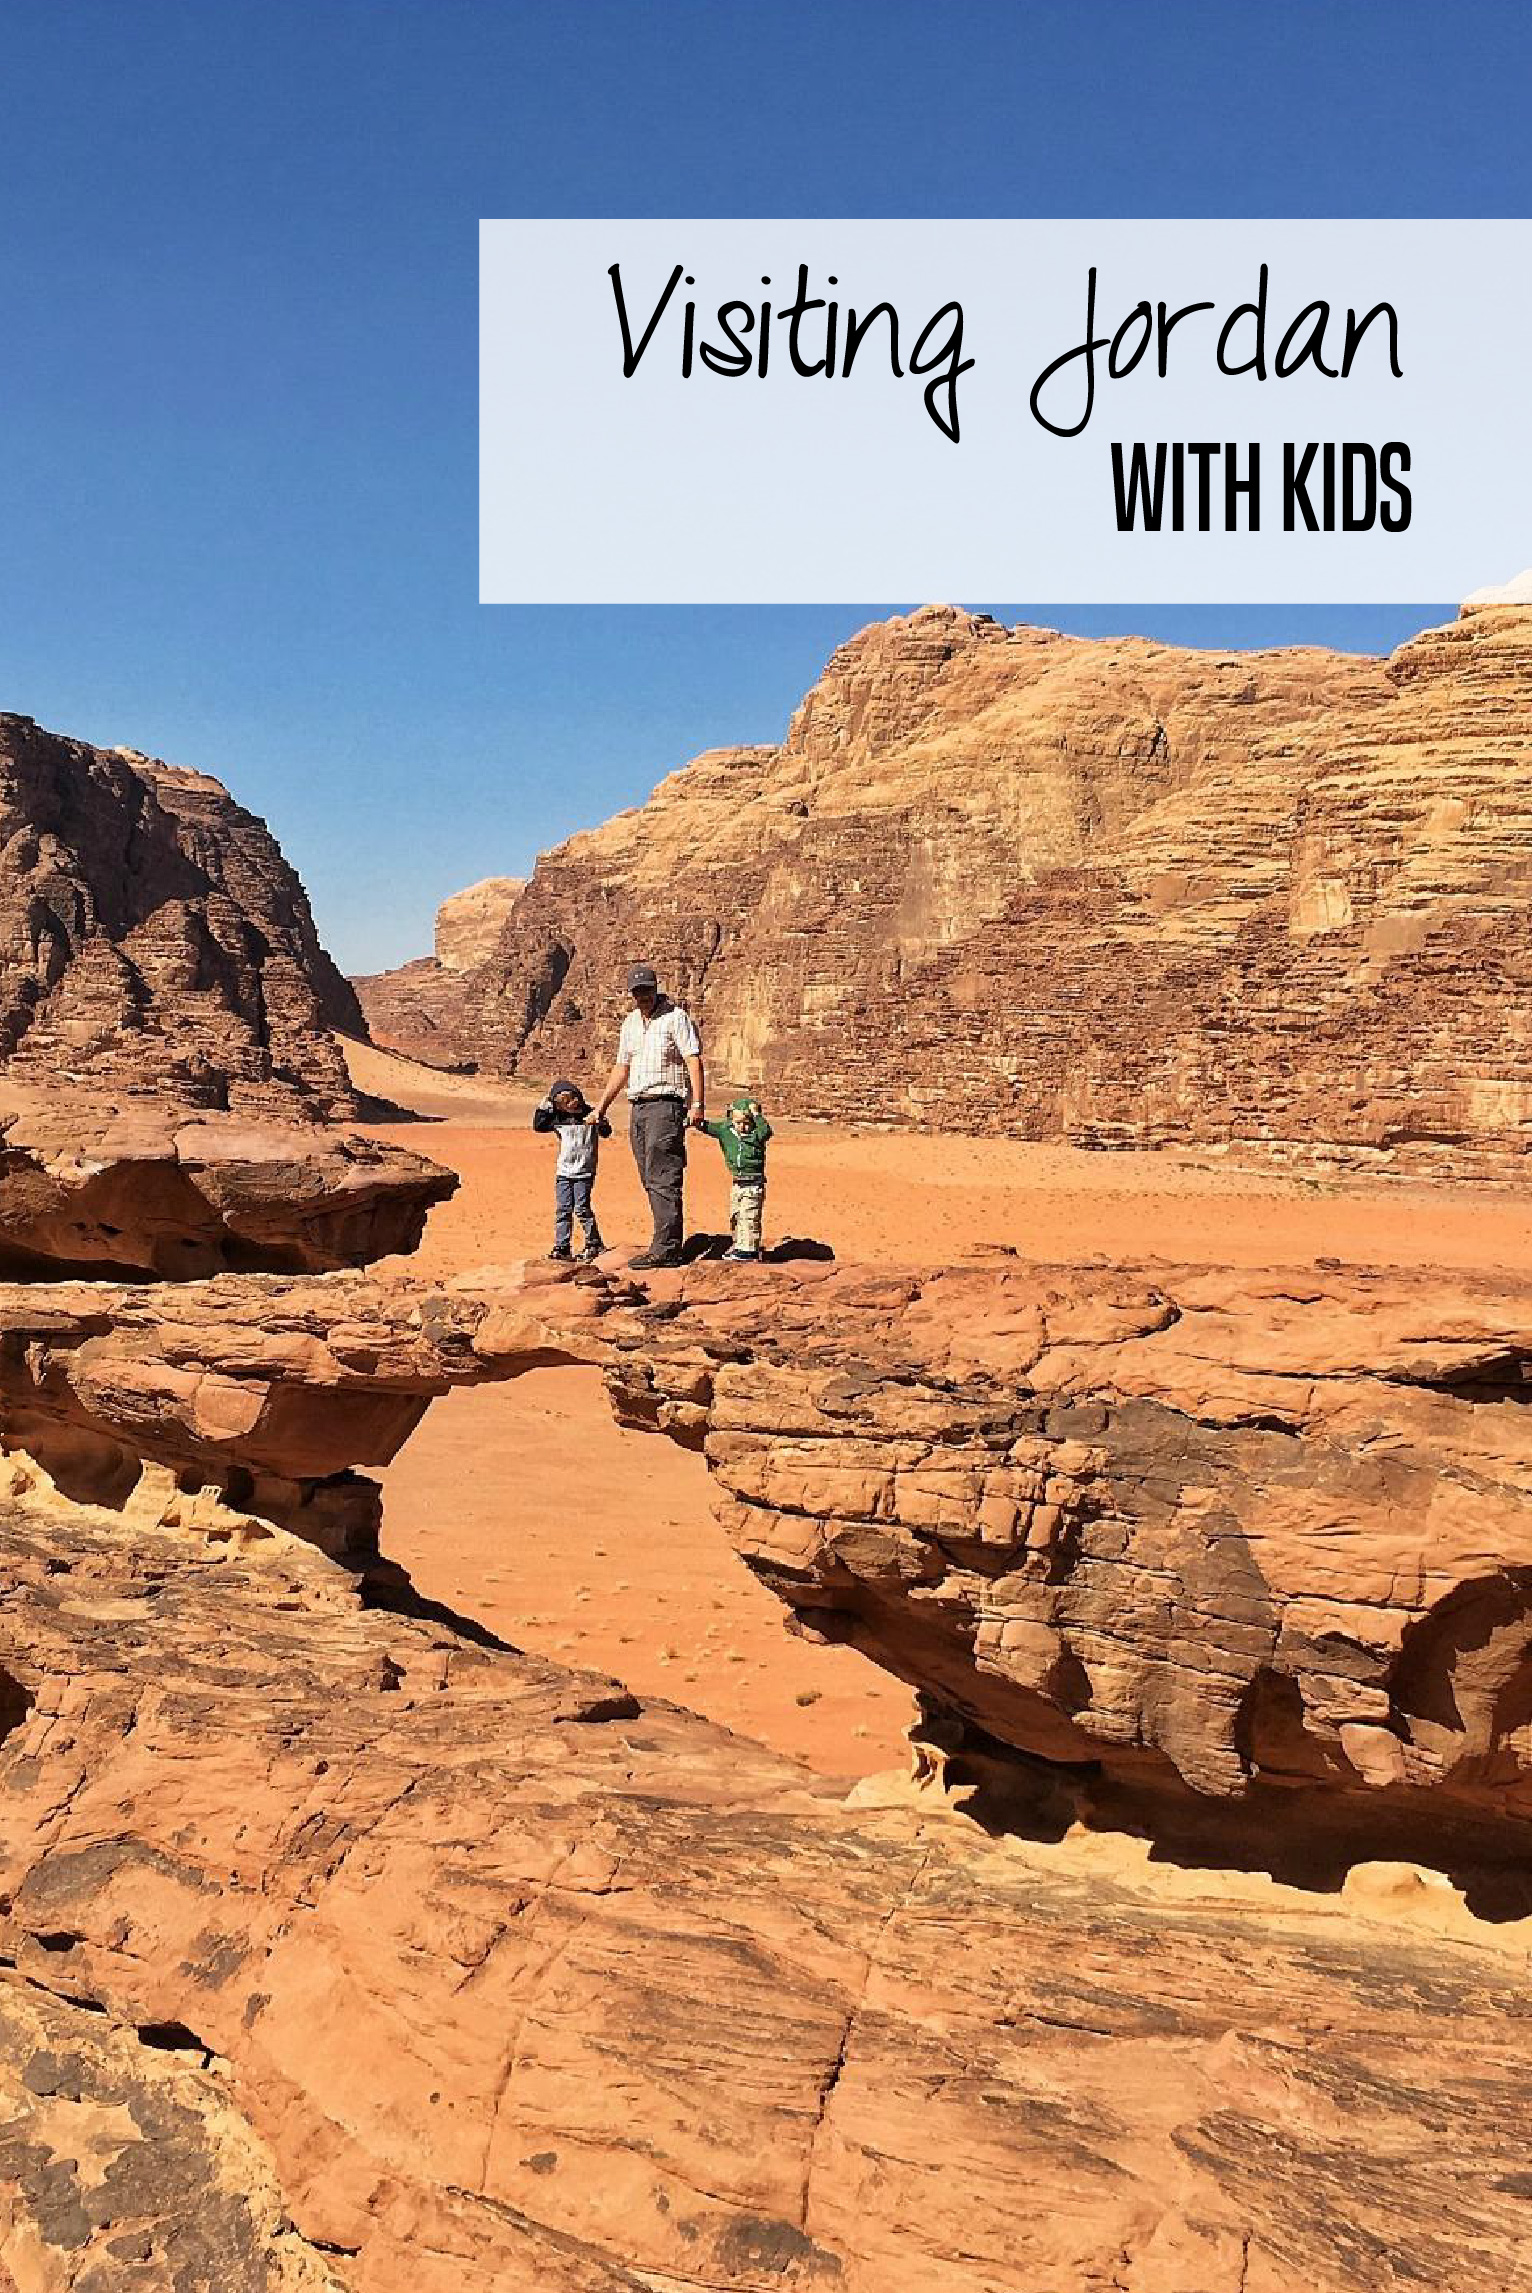 Visiting Jordan with kids